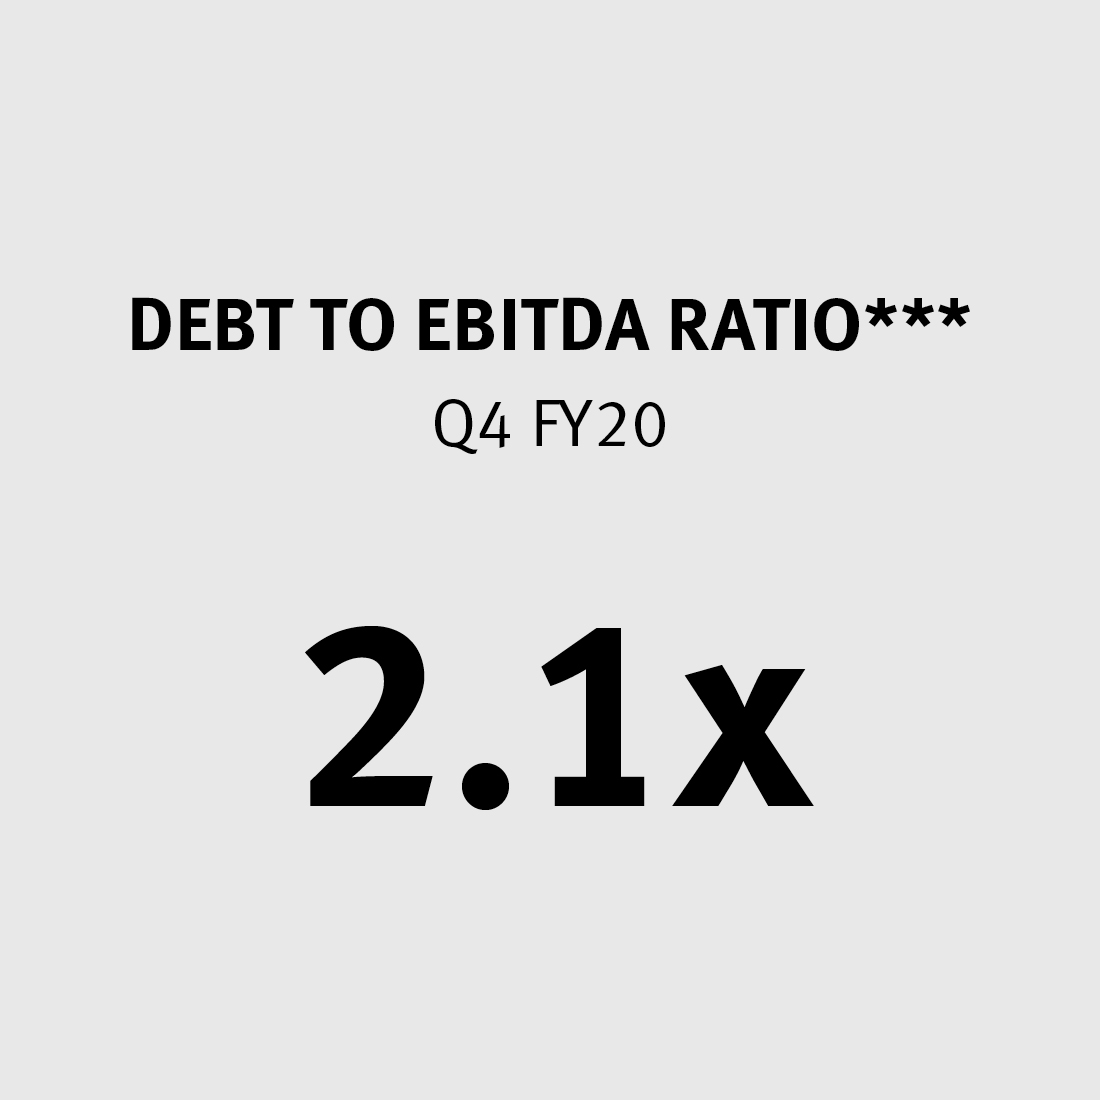 Debt to EBITDA Ratio 2.1x